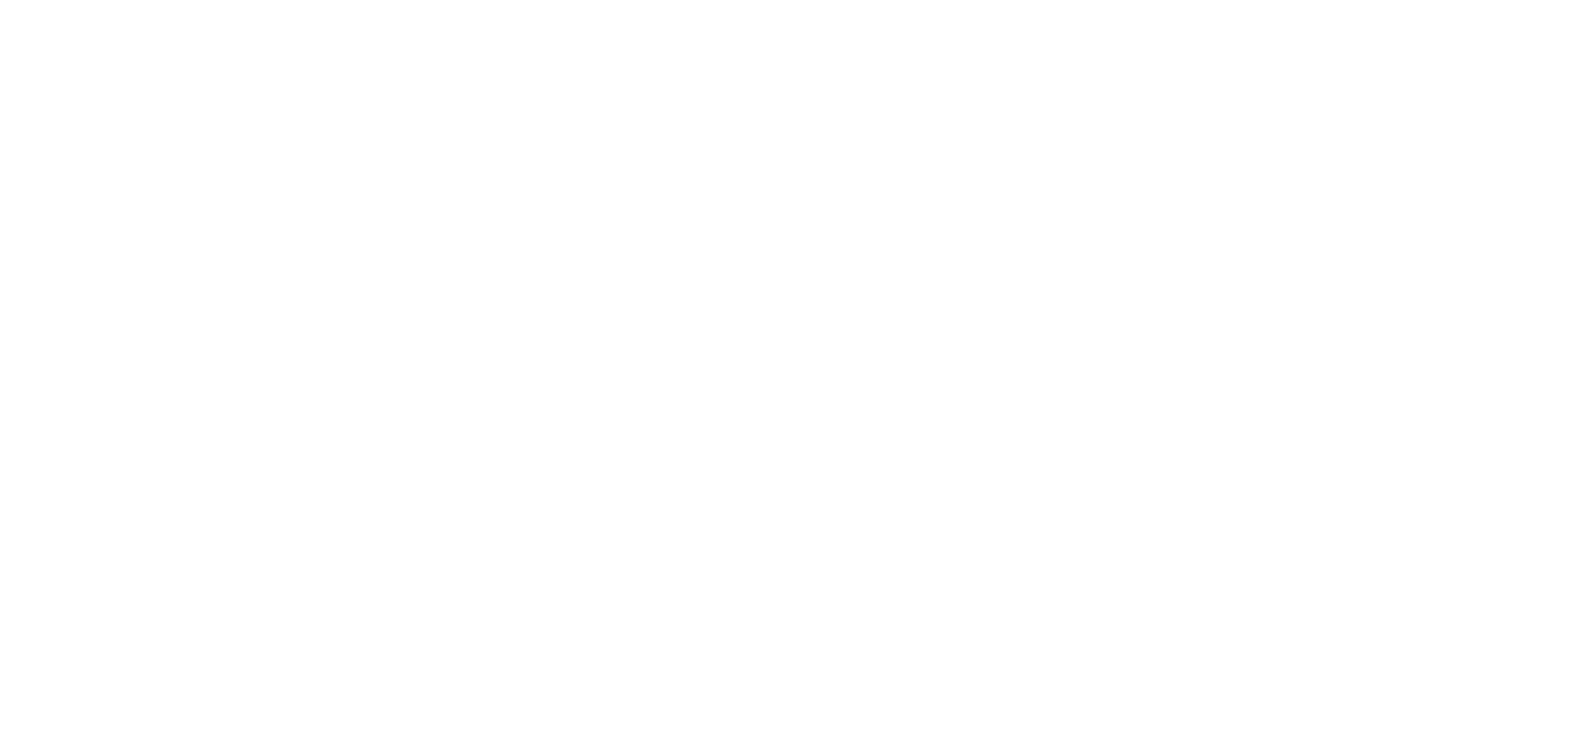 Smith-Midland logo pour fonds sombres (PNG transparent)